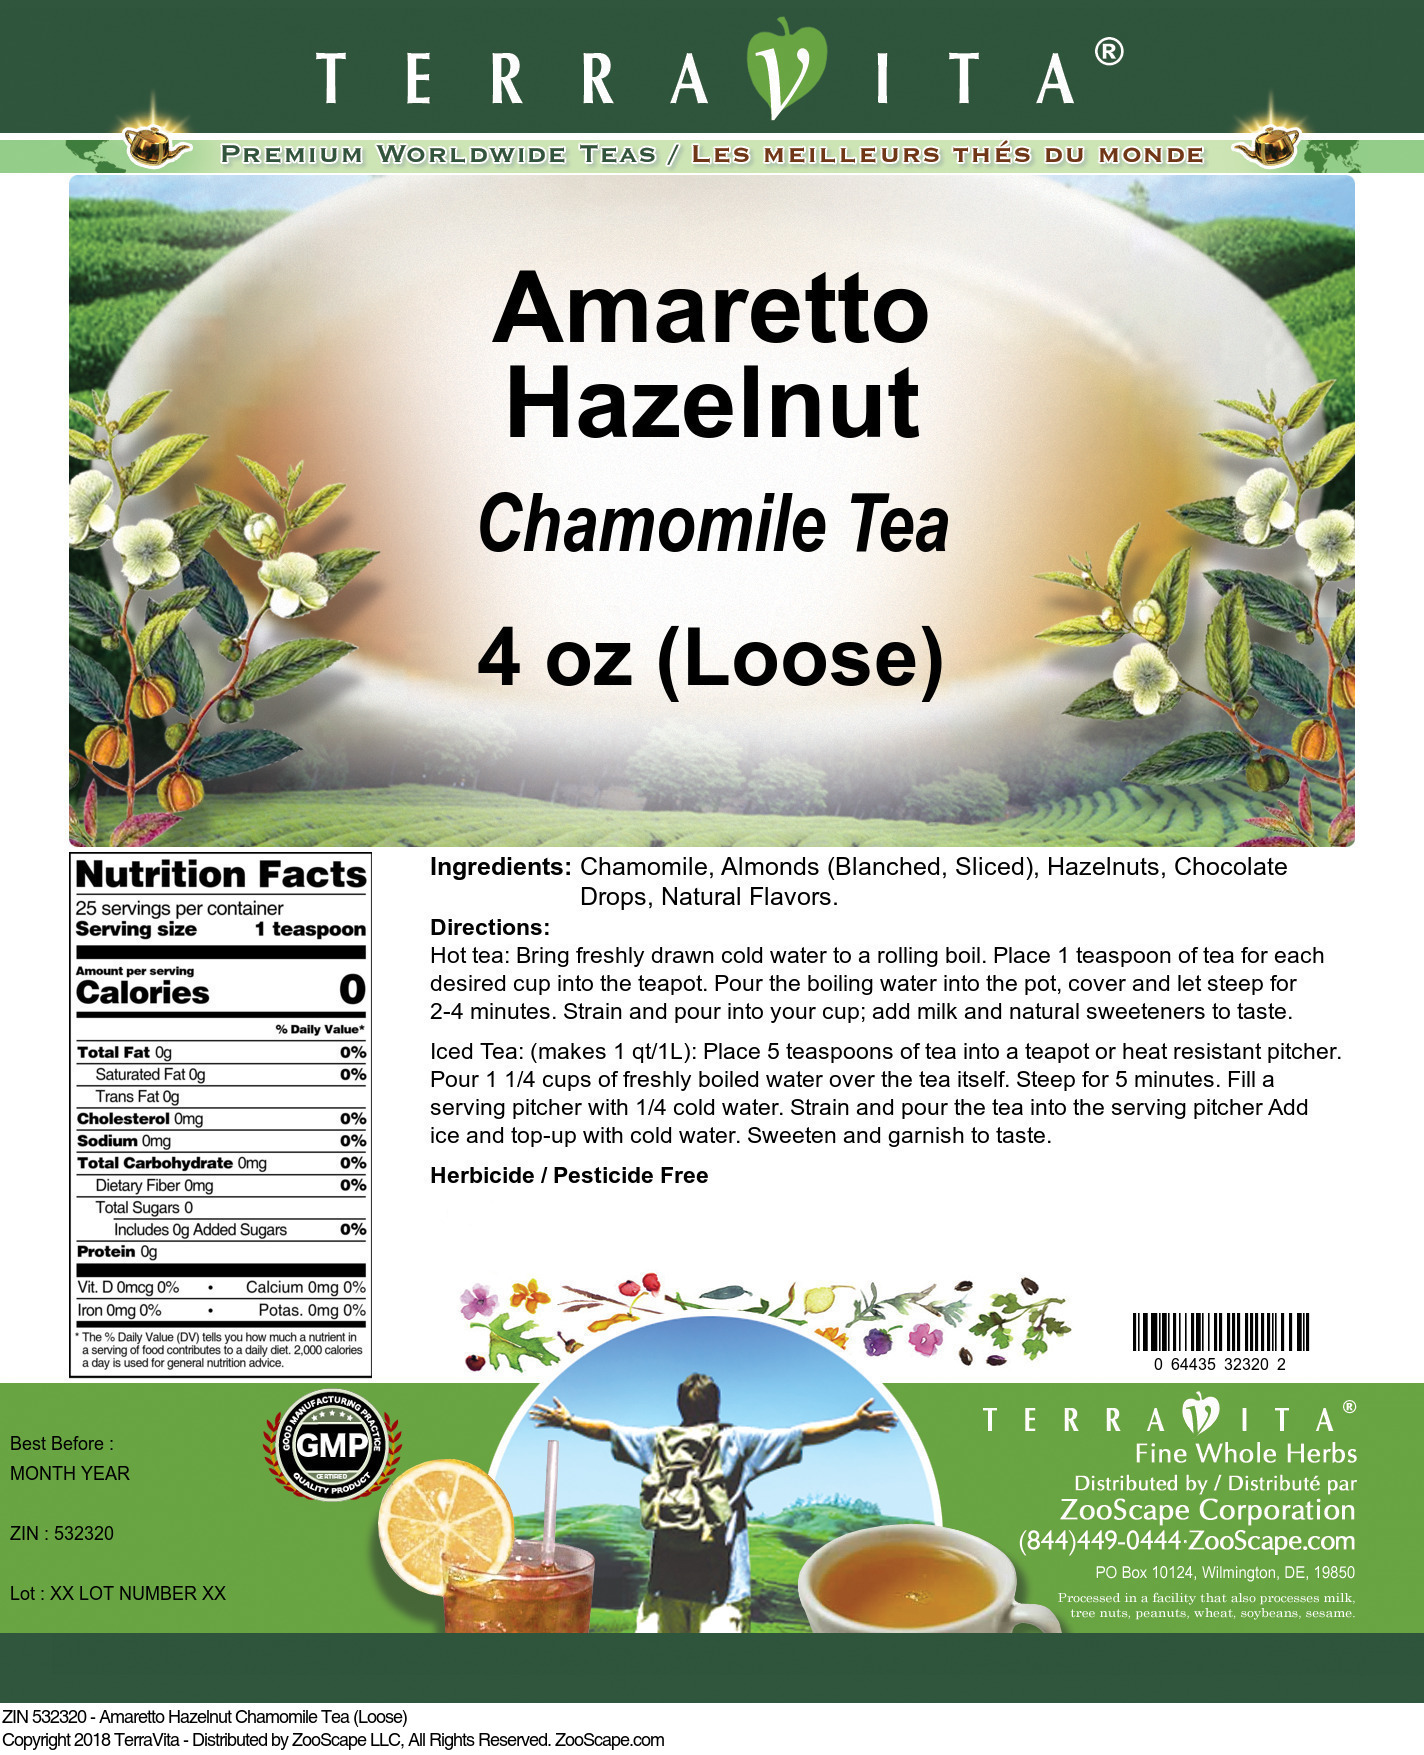 Amaretto Hazelnut Chamomile Tea (Loose) - Label